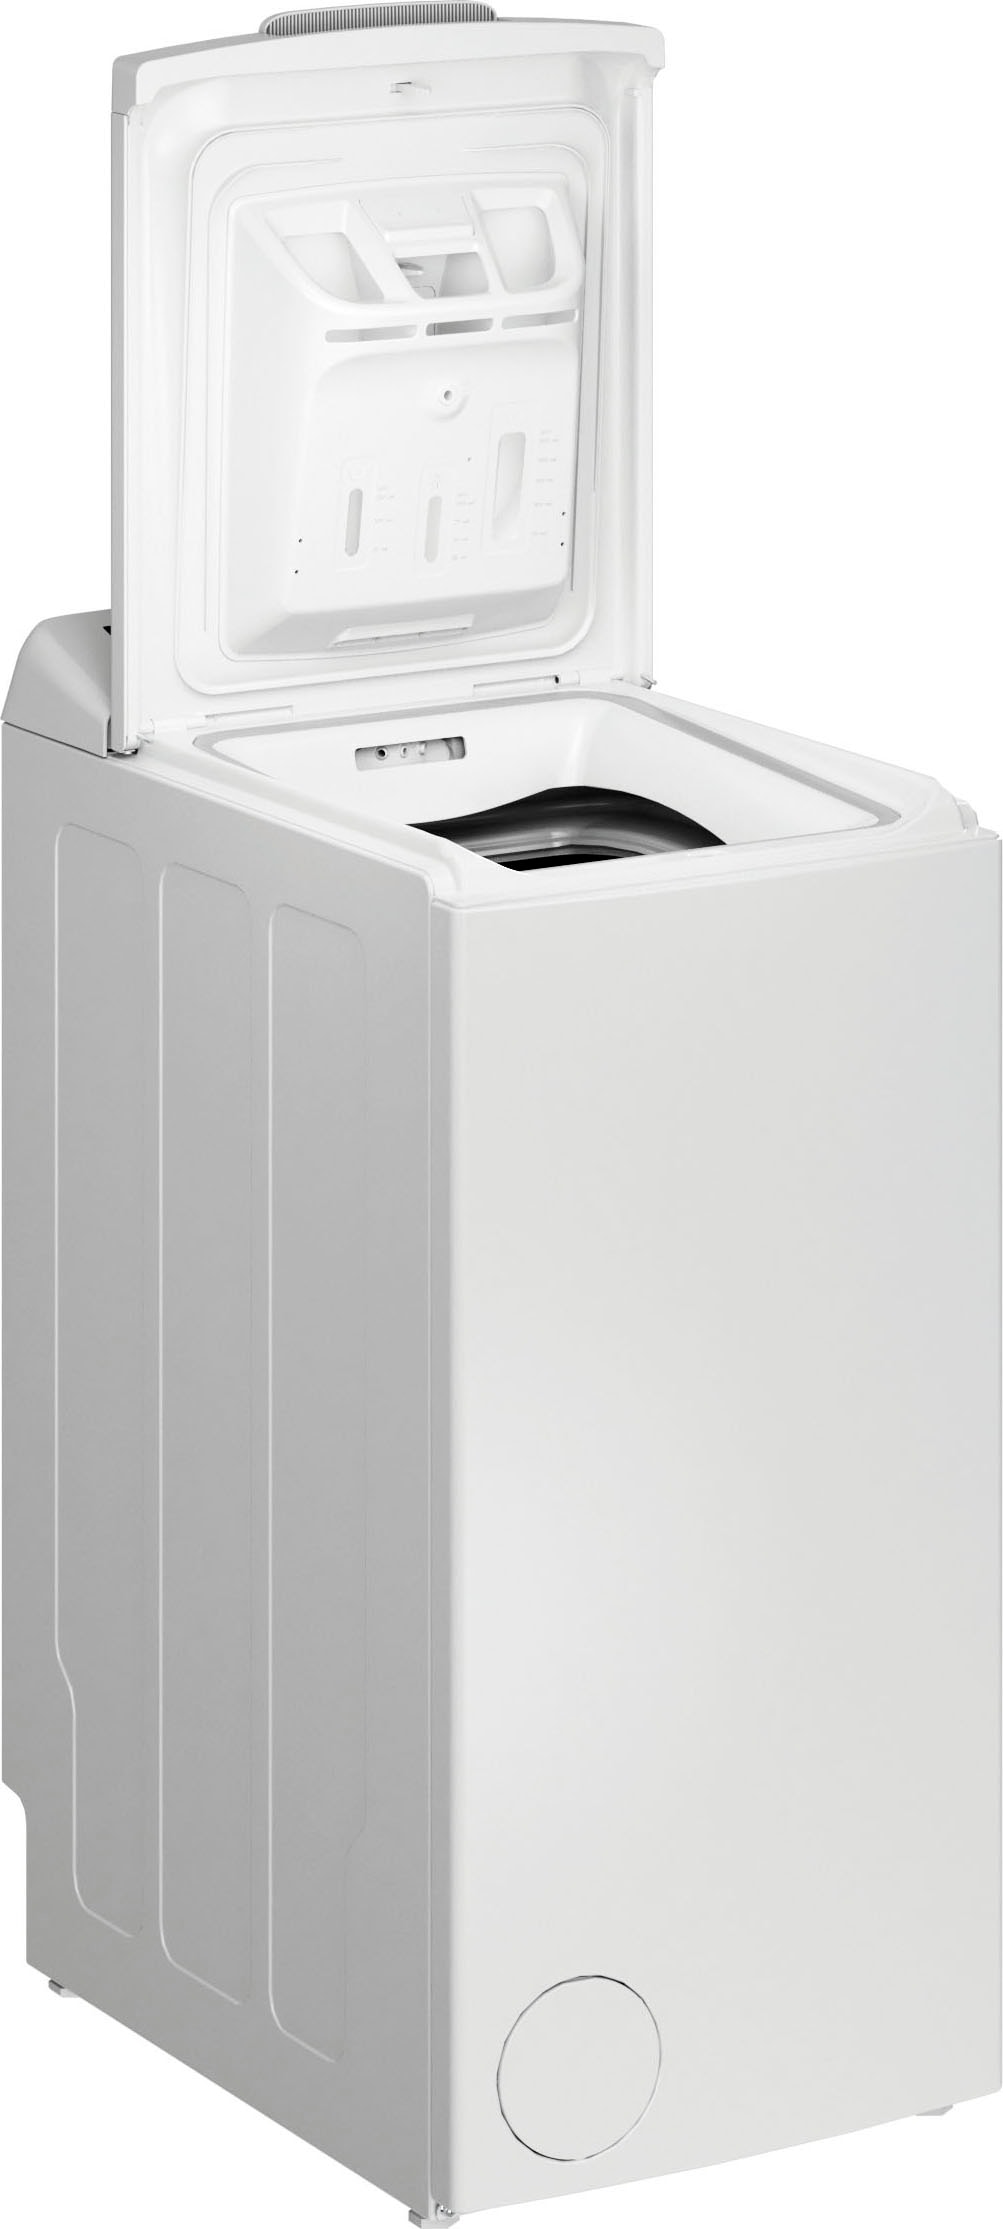 Privileg Waschmaschine Toplader auf PWT 1200 S5 6 N, S5 Class B6 BAUR B6 | kg, N«, »PWT Raten Class U/min